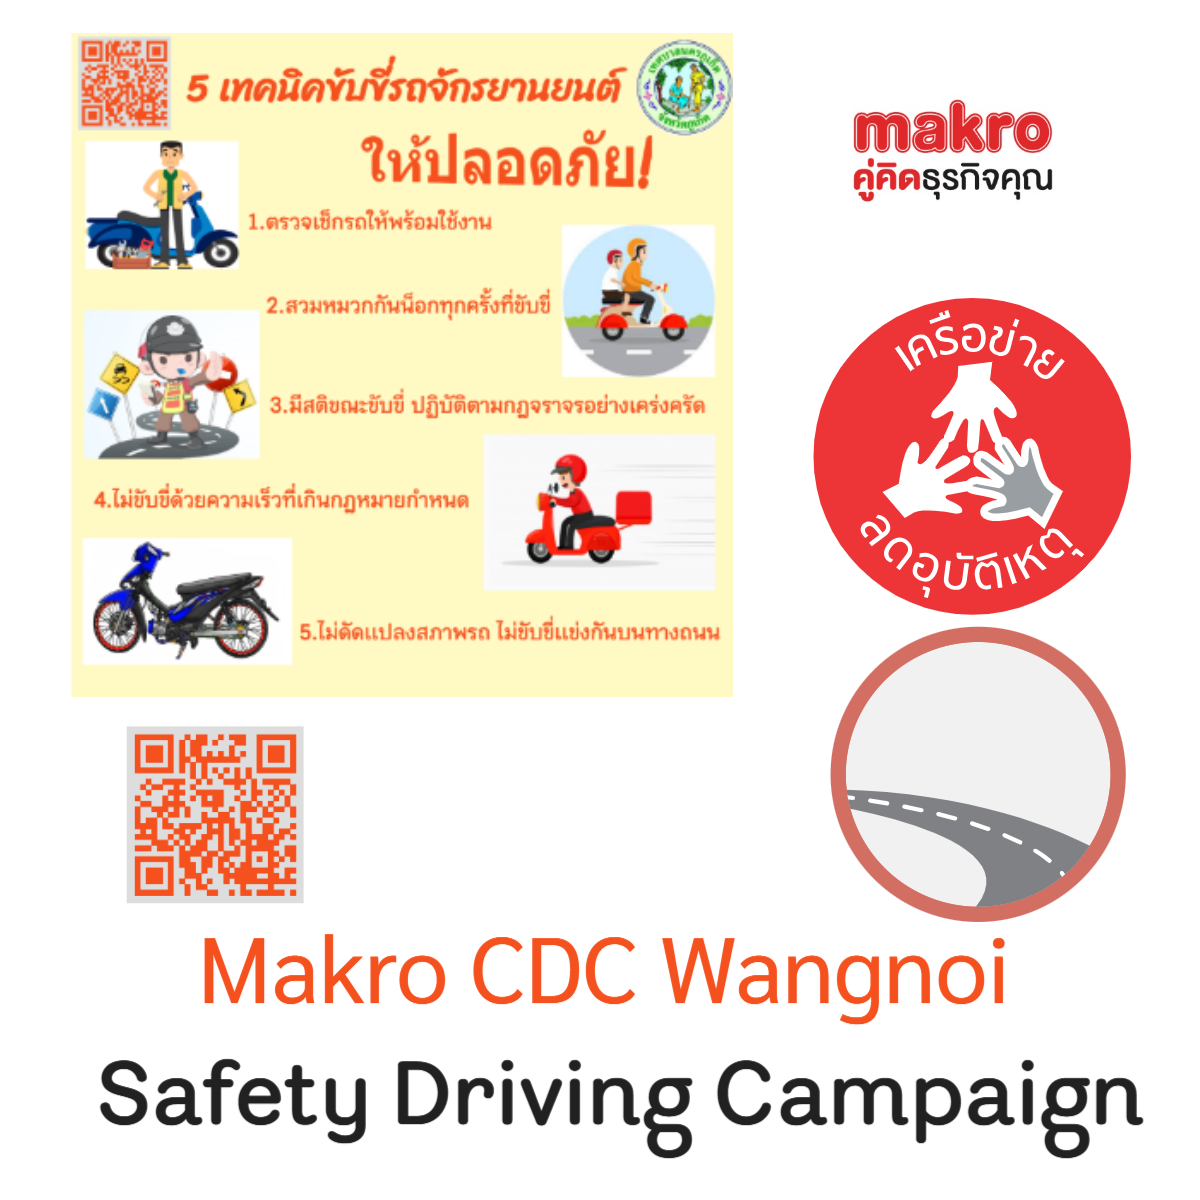 Makro CDC Wangnoi Safety Driving